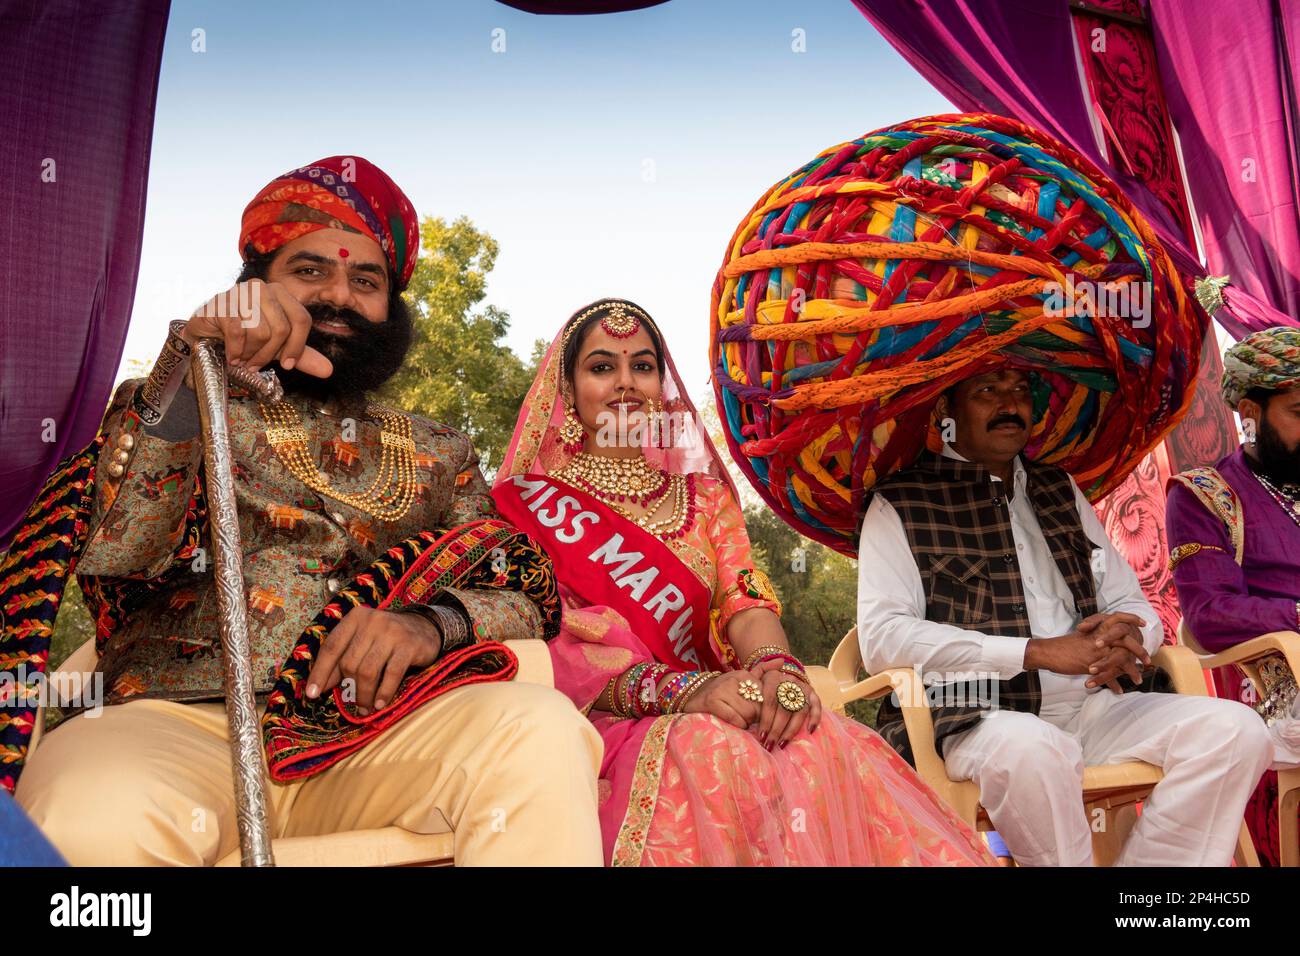 Inde, Rajasthan, Bikaner, Camel Festival Parade, M. Bikana, Miss Marwan et le plus grand turban en flotteur Banque D'Images